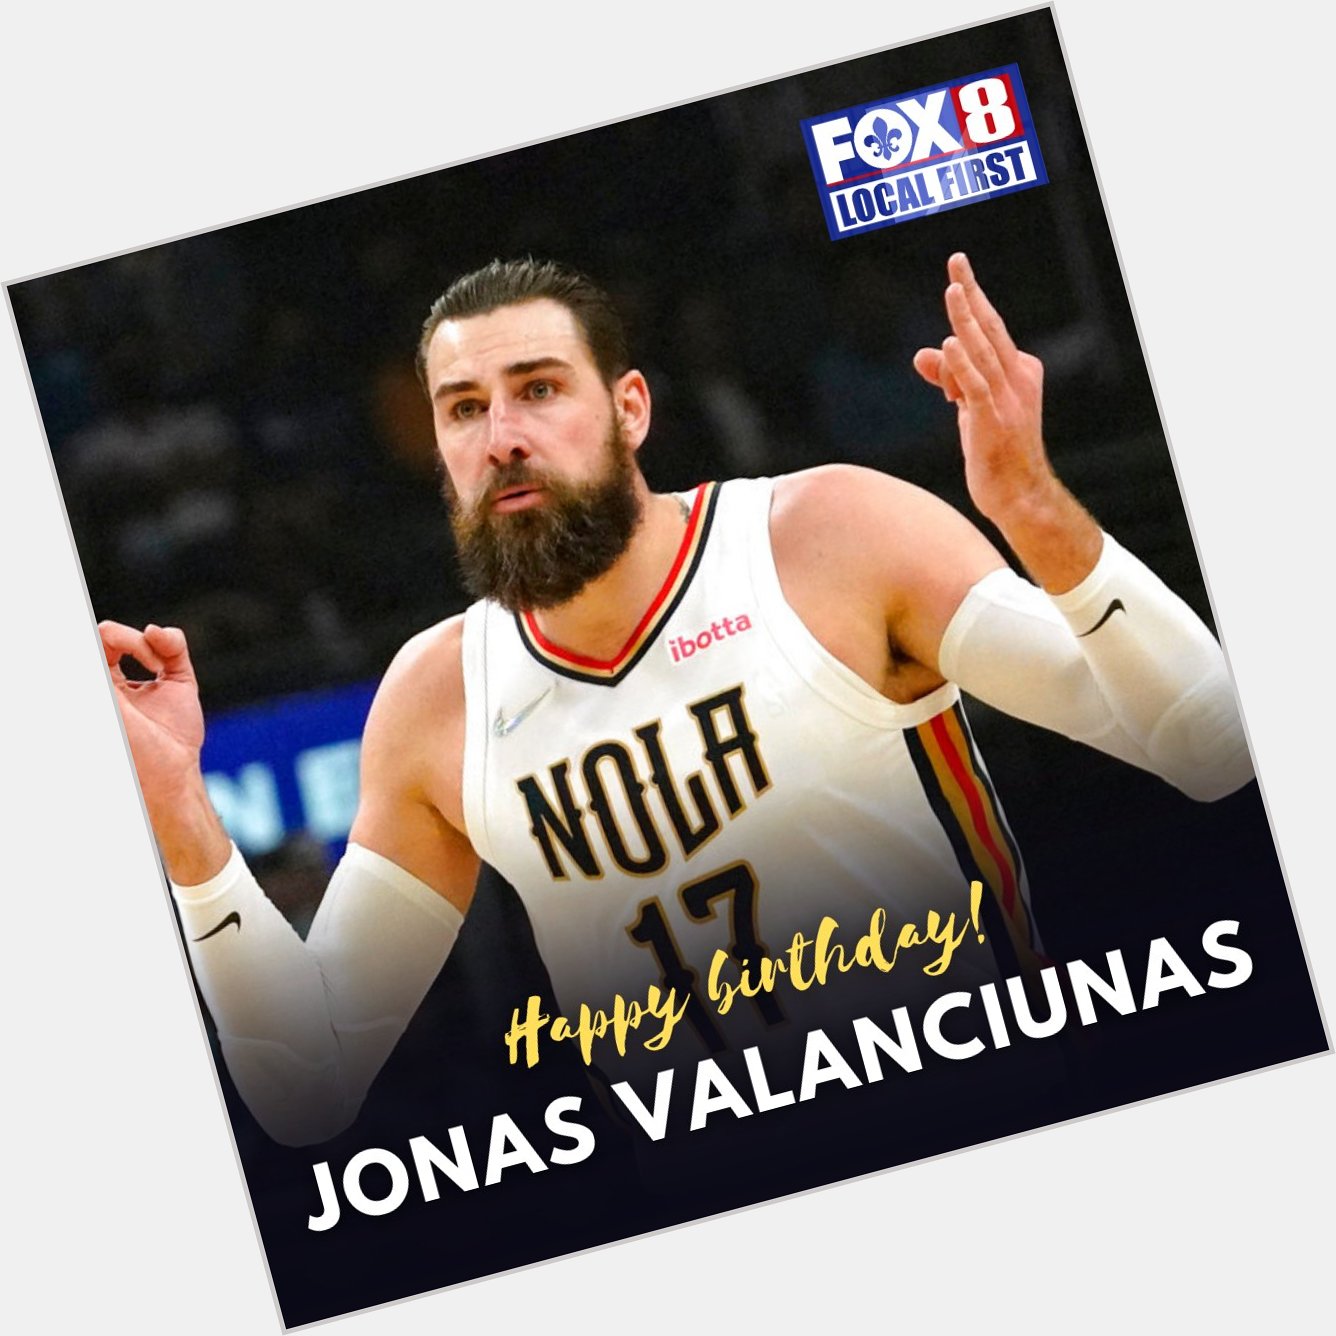 Happy birthday to Pelicans starting center Jonas Valanciunas! The big 3-0! 